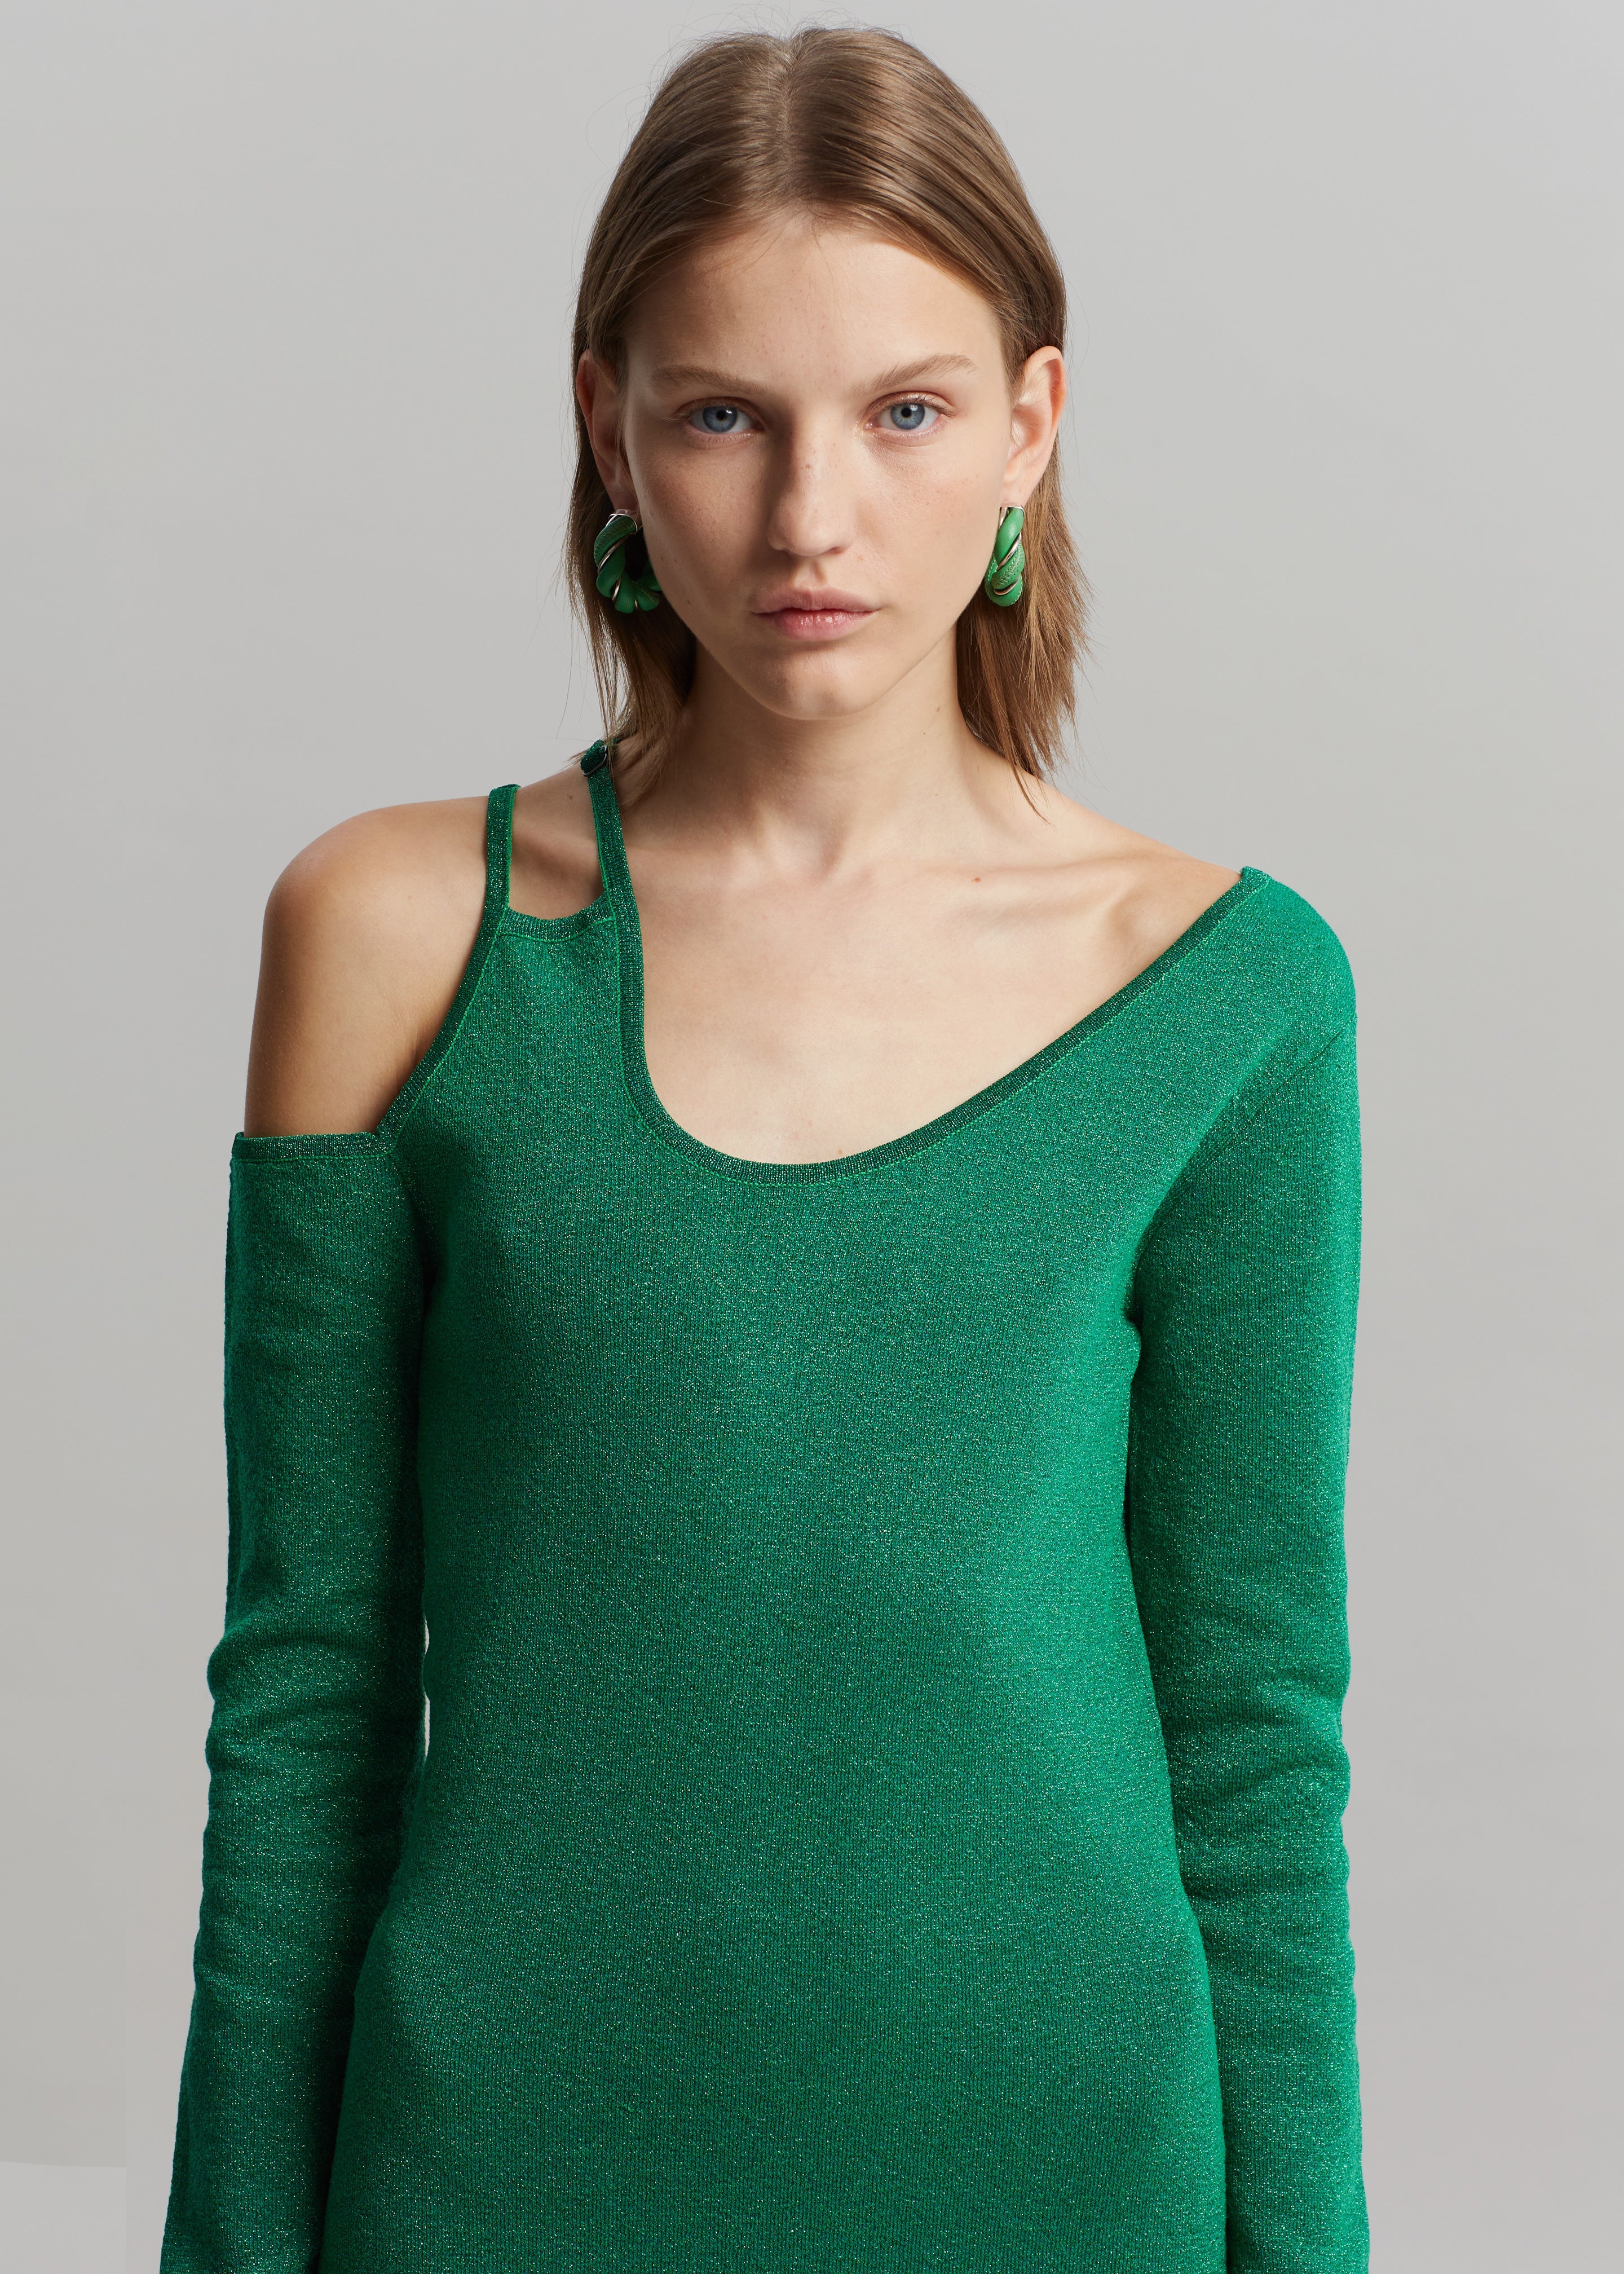 JW Anderson Cut Out Detail Asymmetric Dress - Emerald - 2